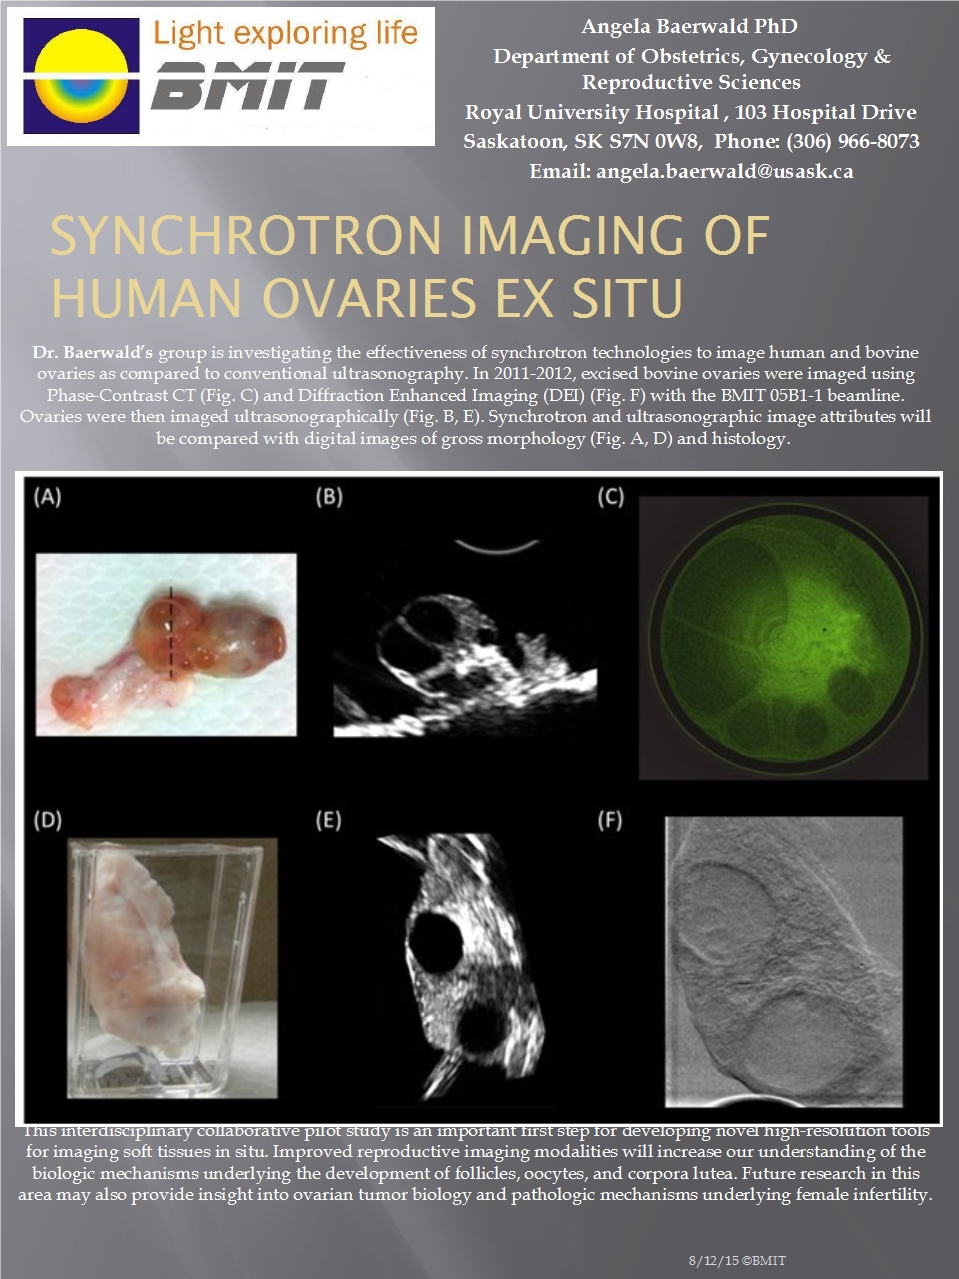 Synchrotron Imaging Of Human Ovaries ex Situ Image